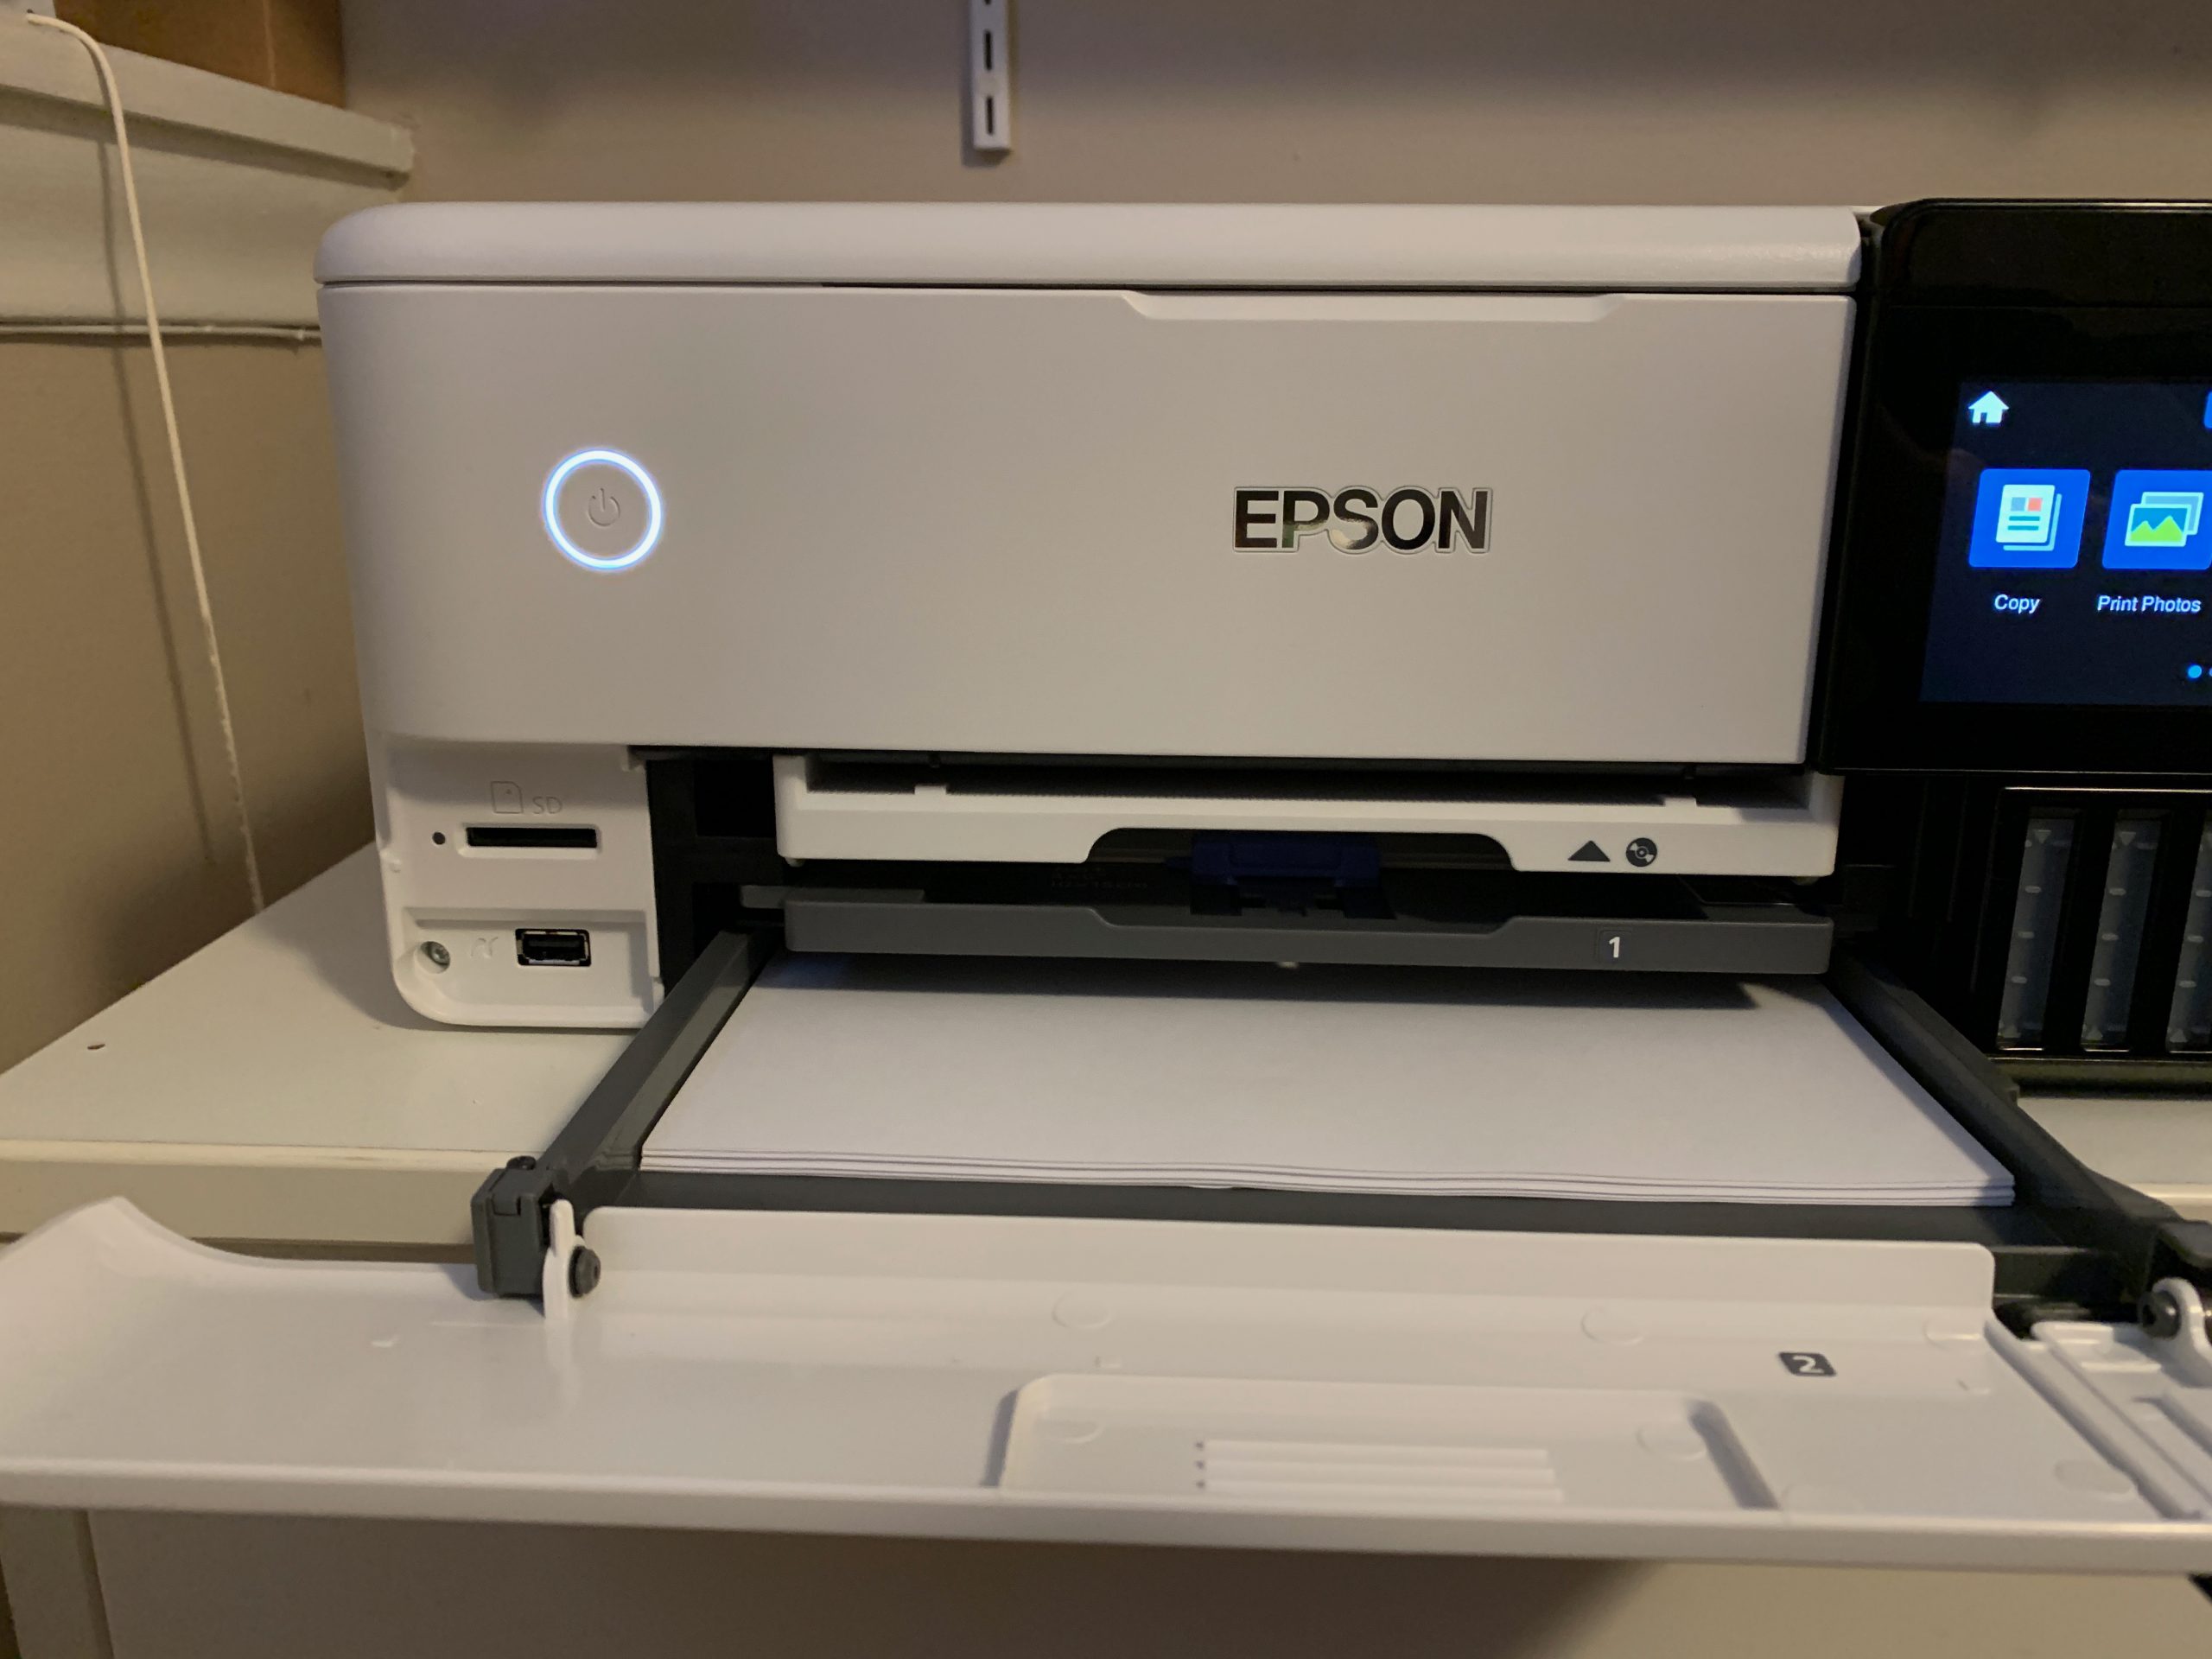 Unboxing Epson EcoTank Photo Printer ET-8500